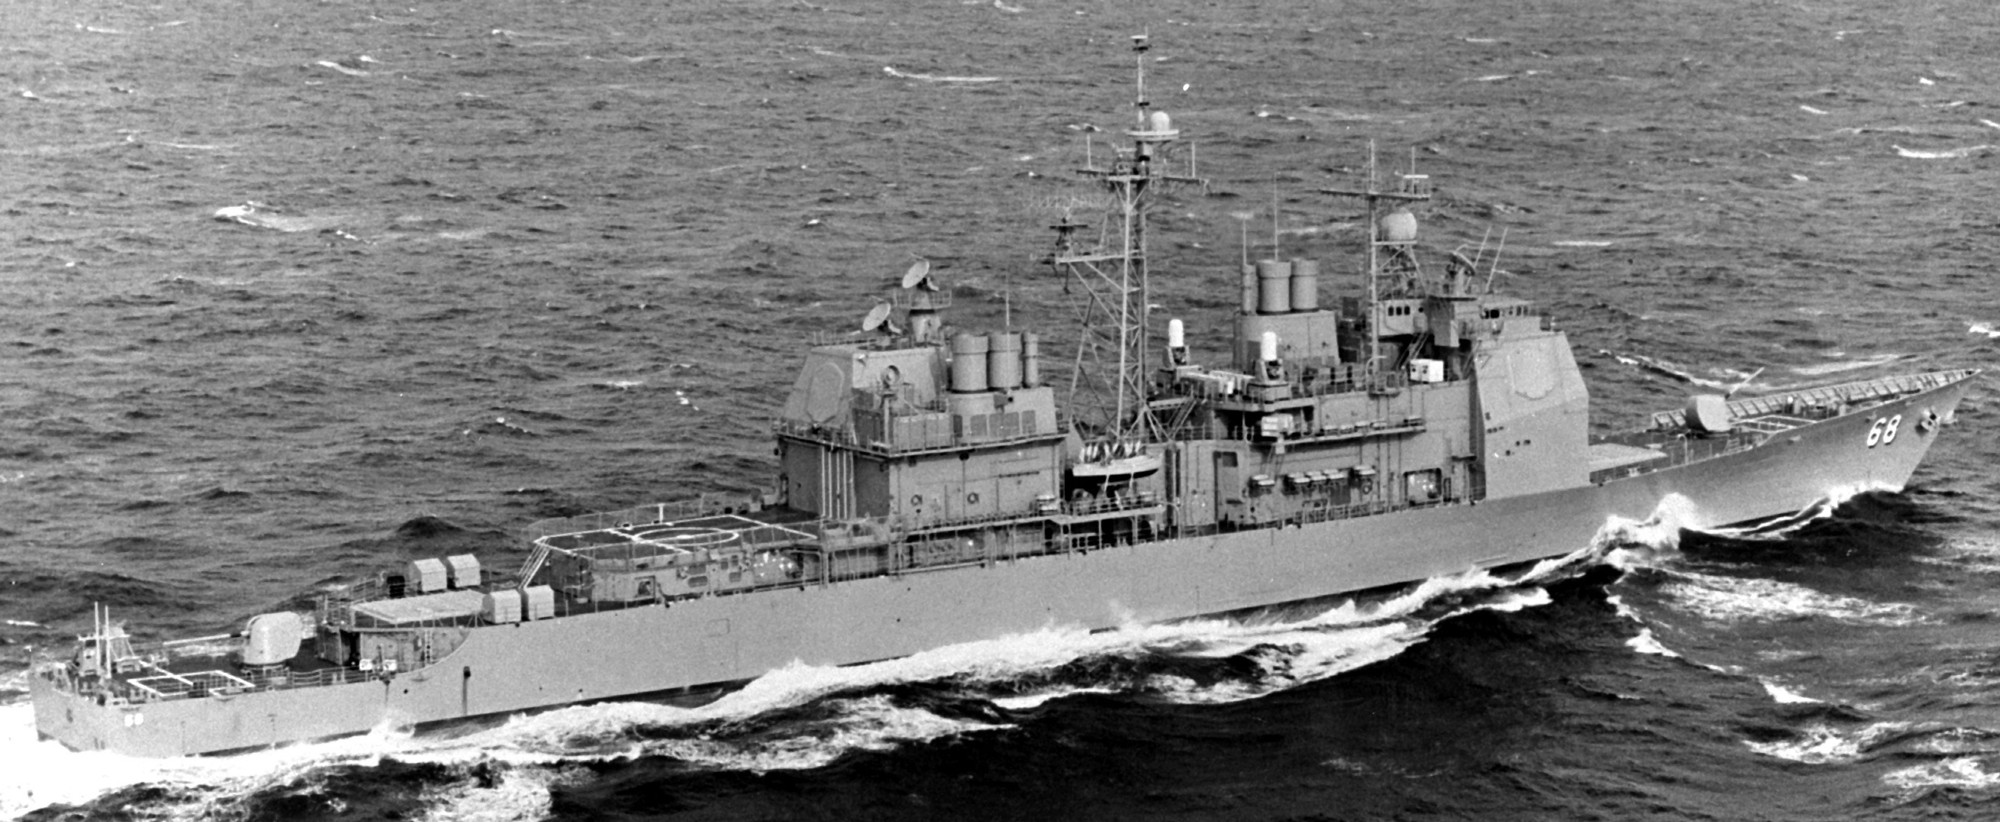 cg-68 uss anzio ticonderoga class guided missile cruiser aegis us navy sea trials 55